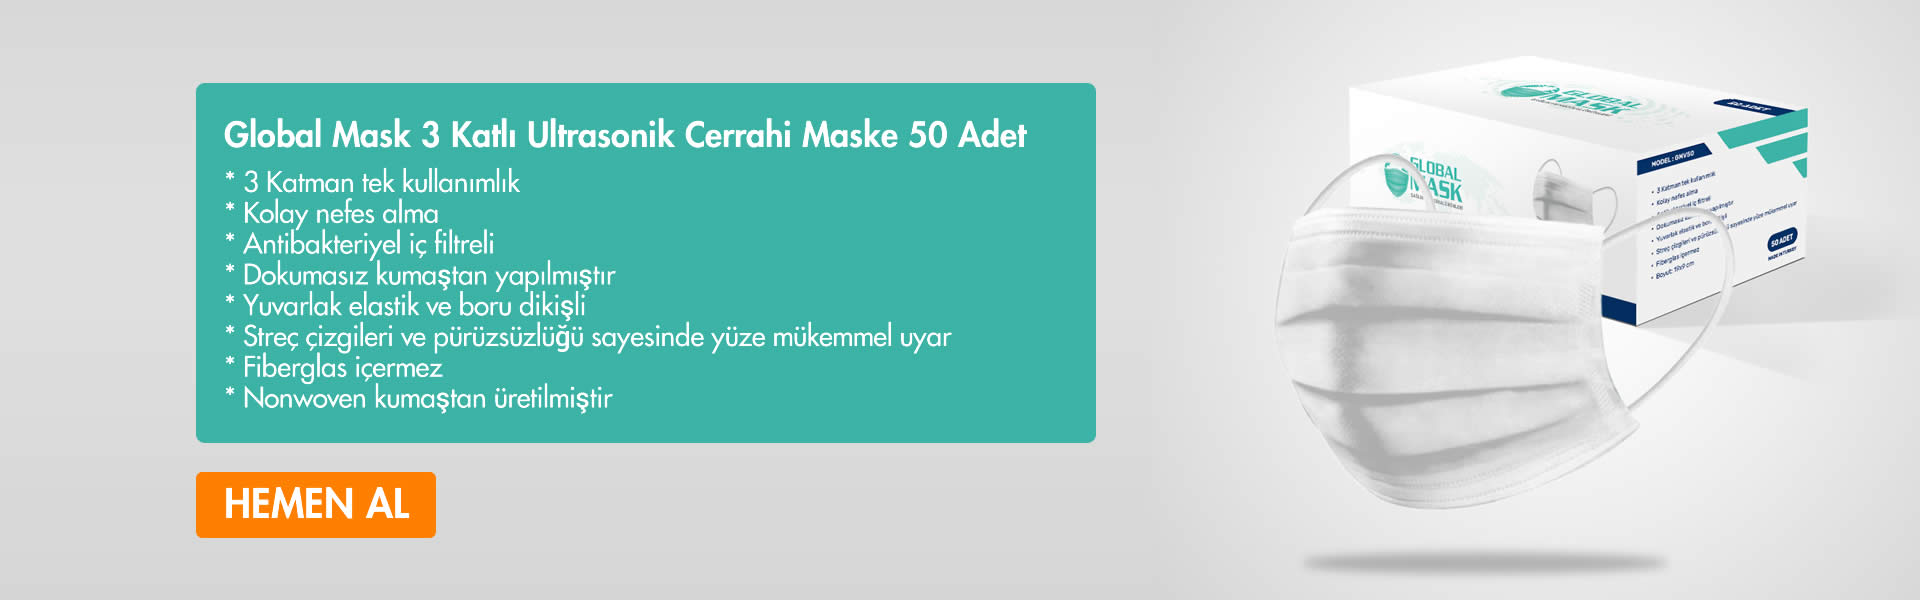 Global Mask 3 Katlı Ultrasonik Cerrahi Maske 50 Adet